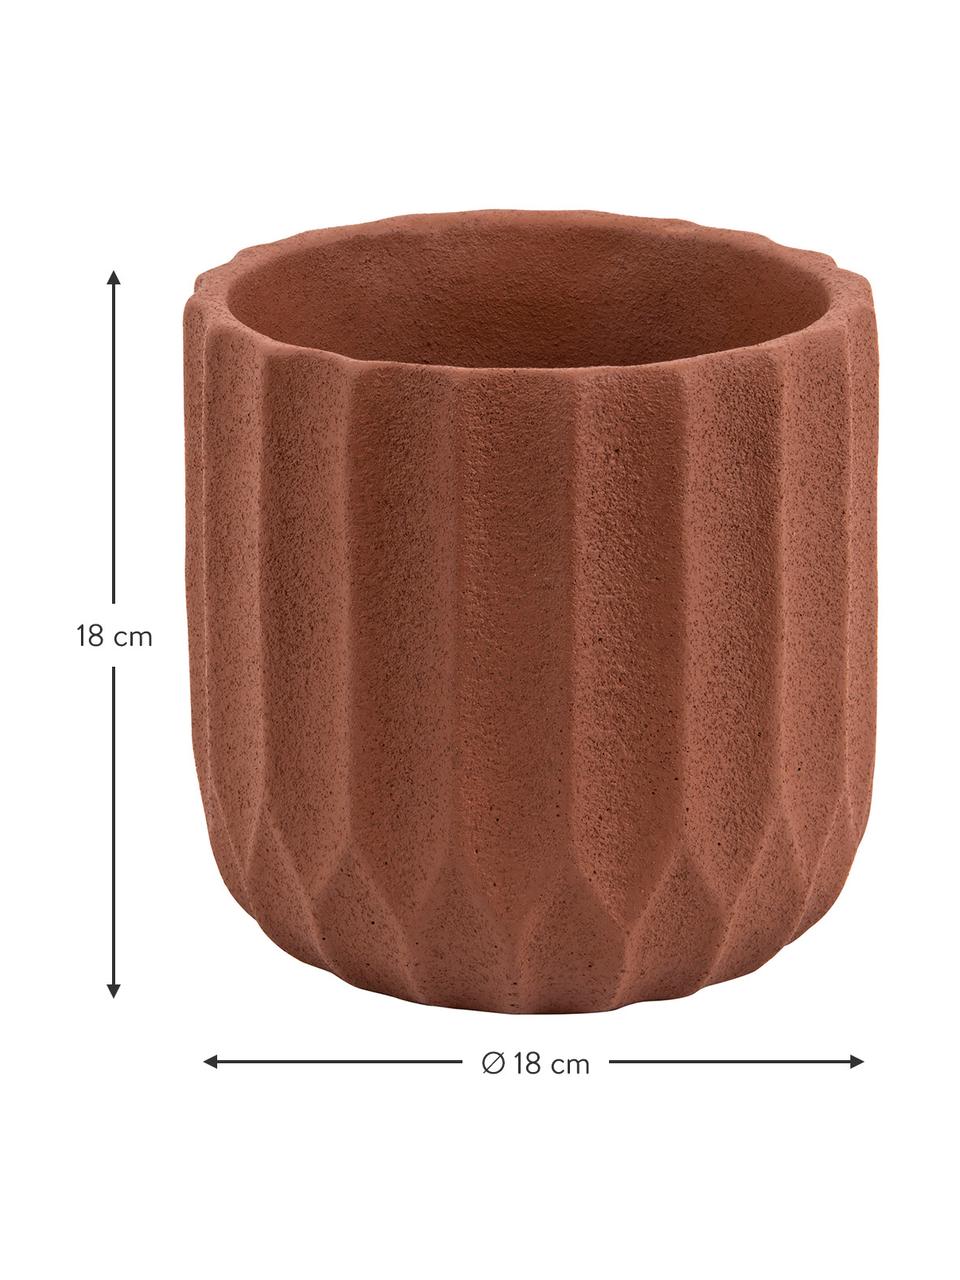 Übertopf Stripes aus Beton, Keramik, Braun, Ø 18 x H 18 cm